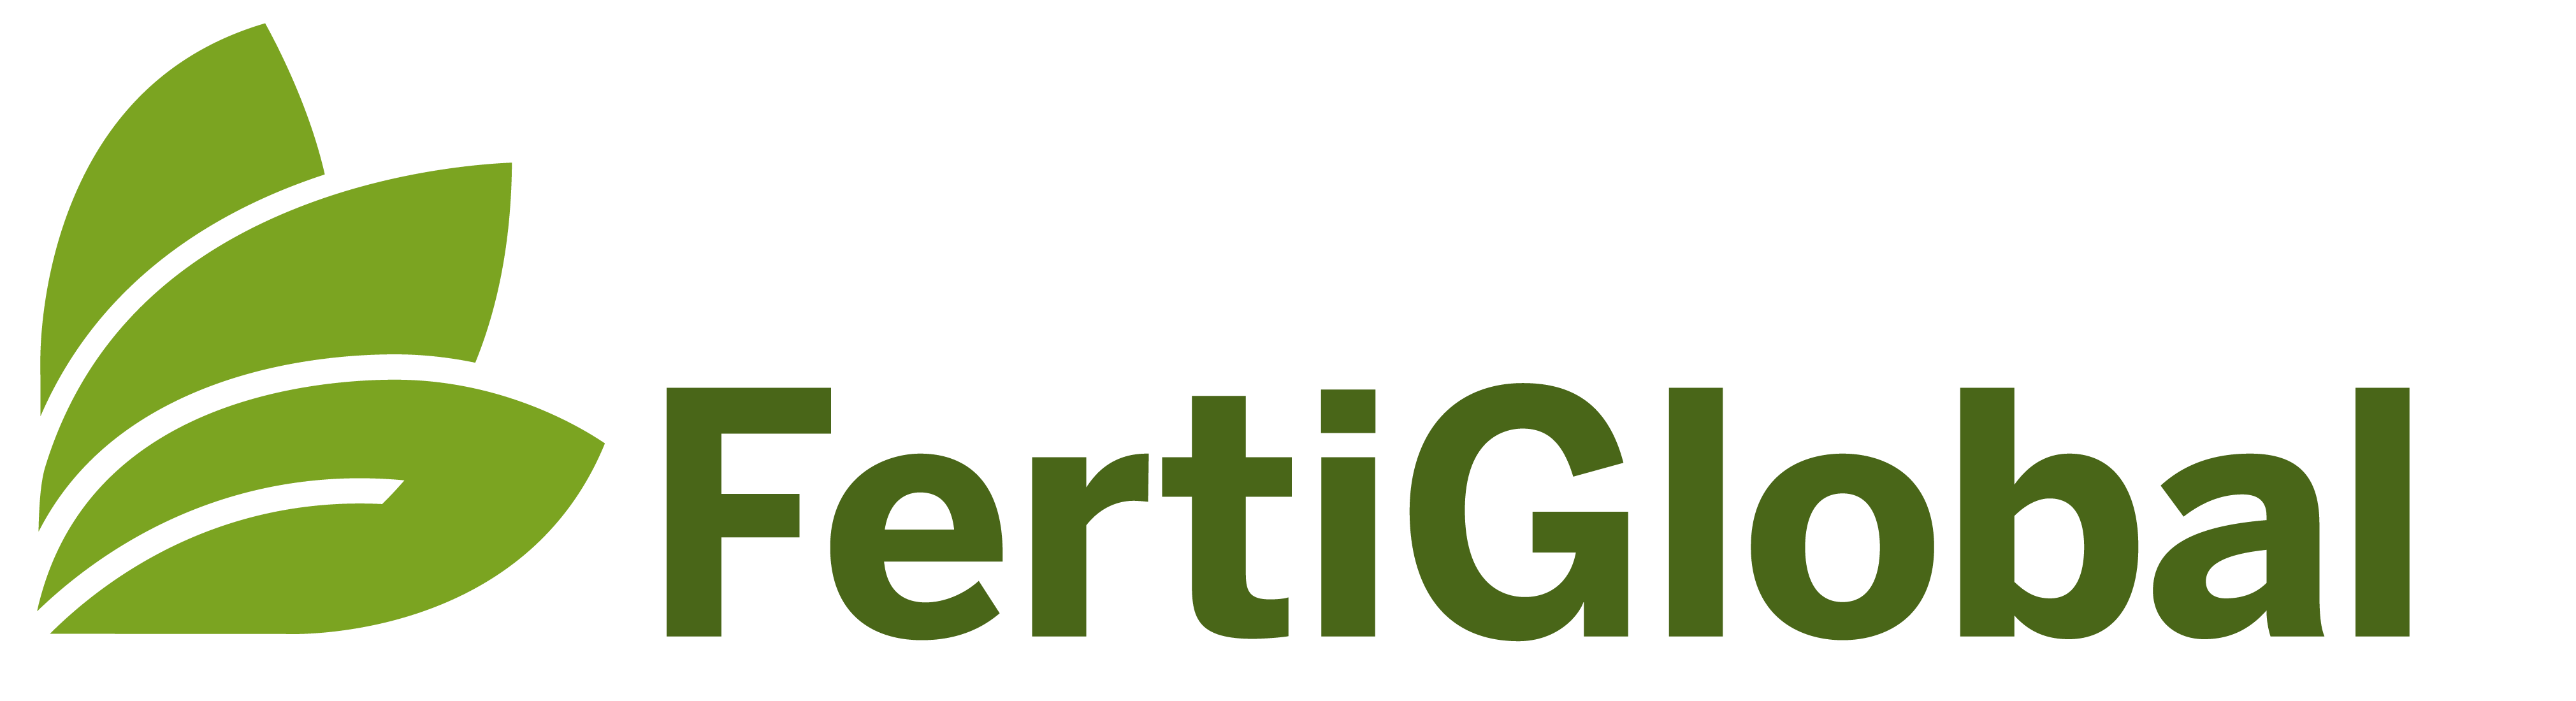 Fertiglobal logo green